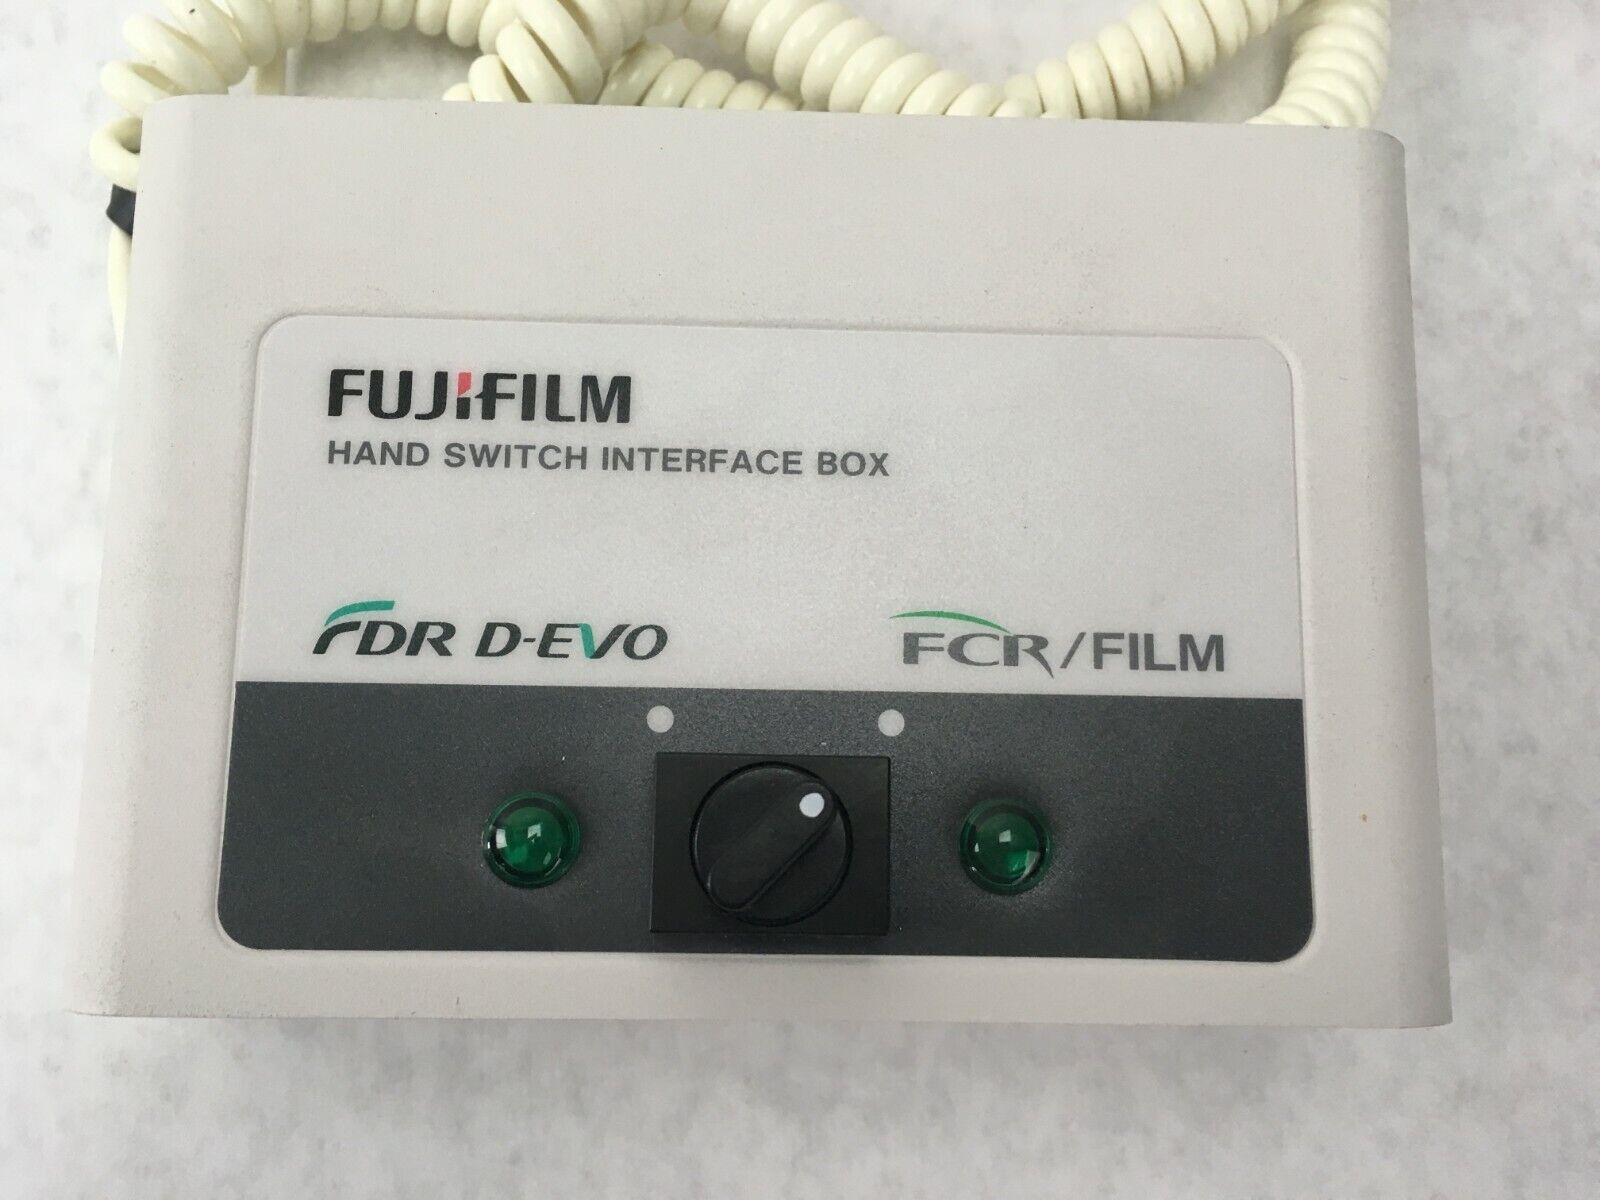 Fujifilm FCR Hand Switch Interface Box DR ID-600